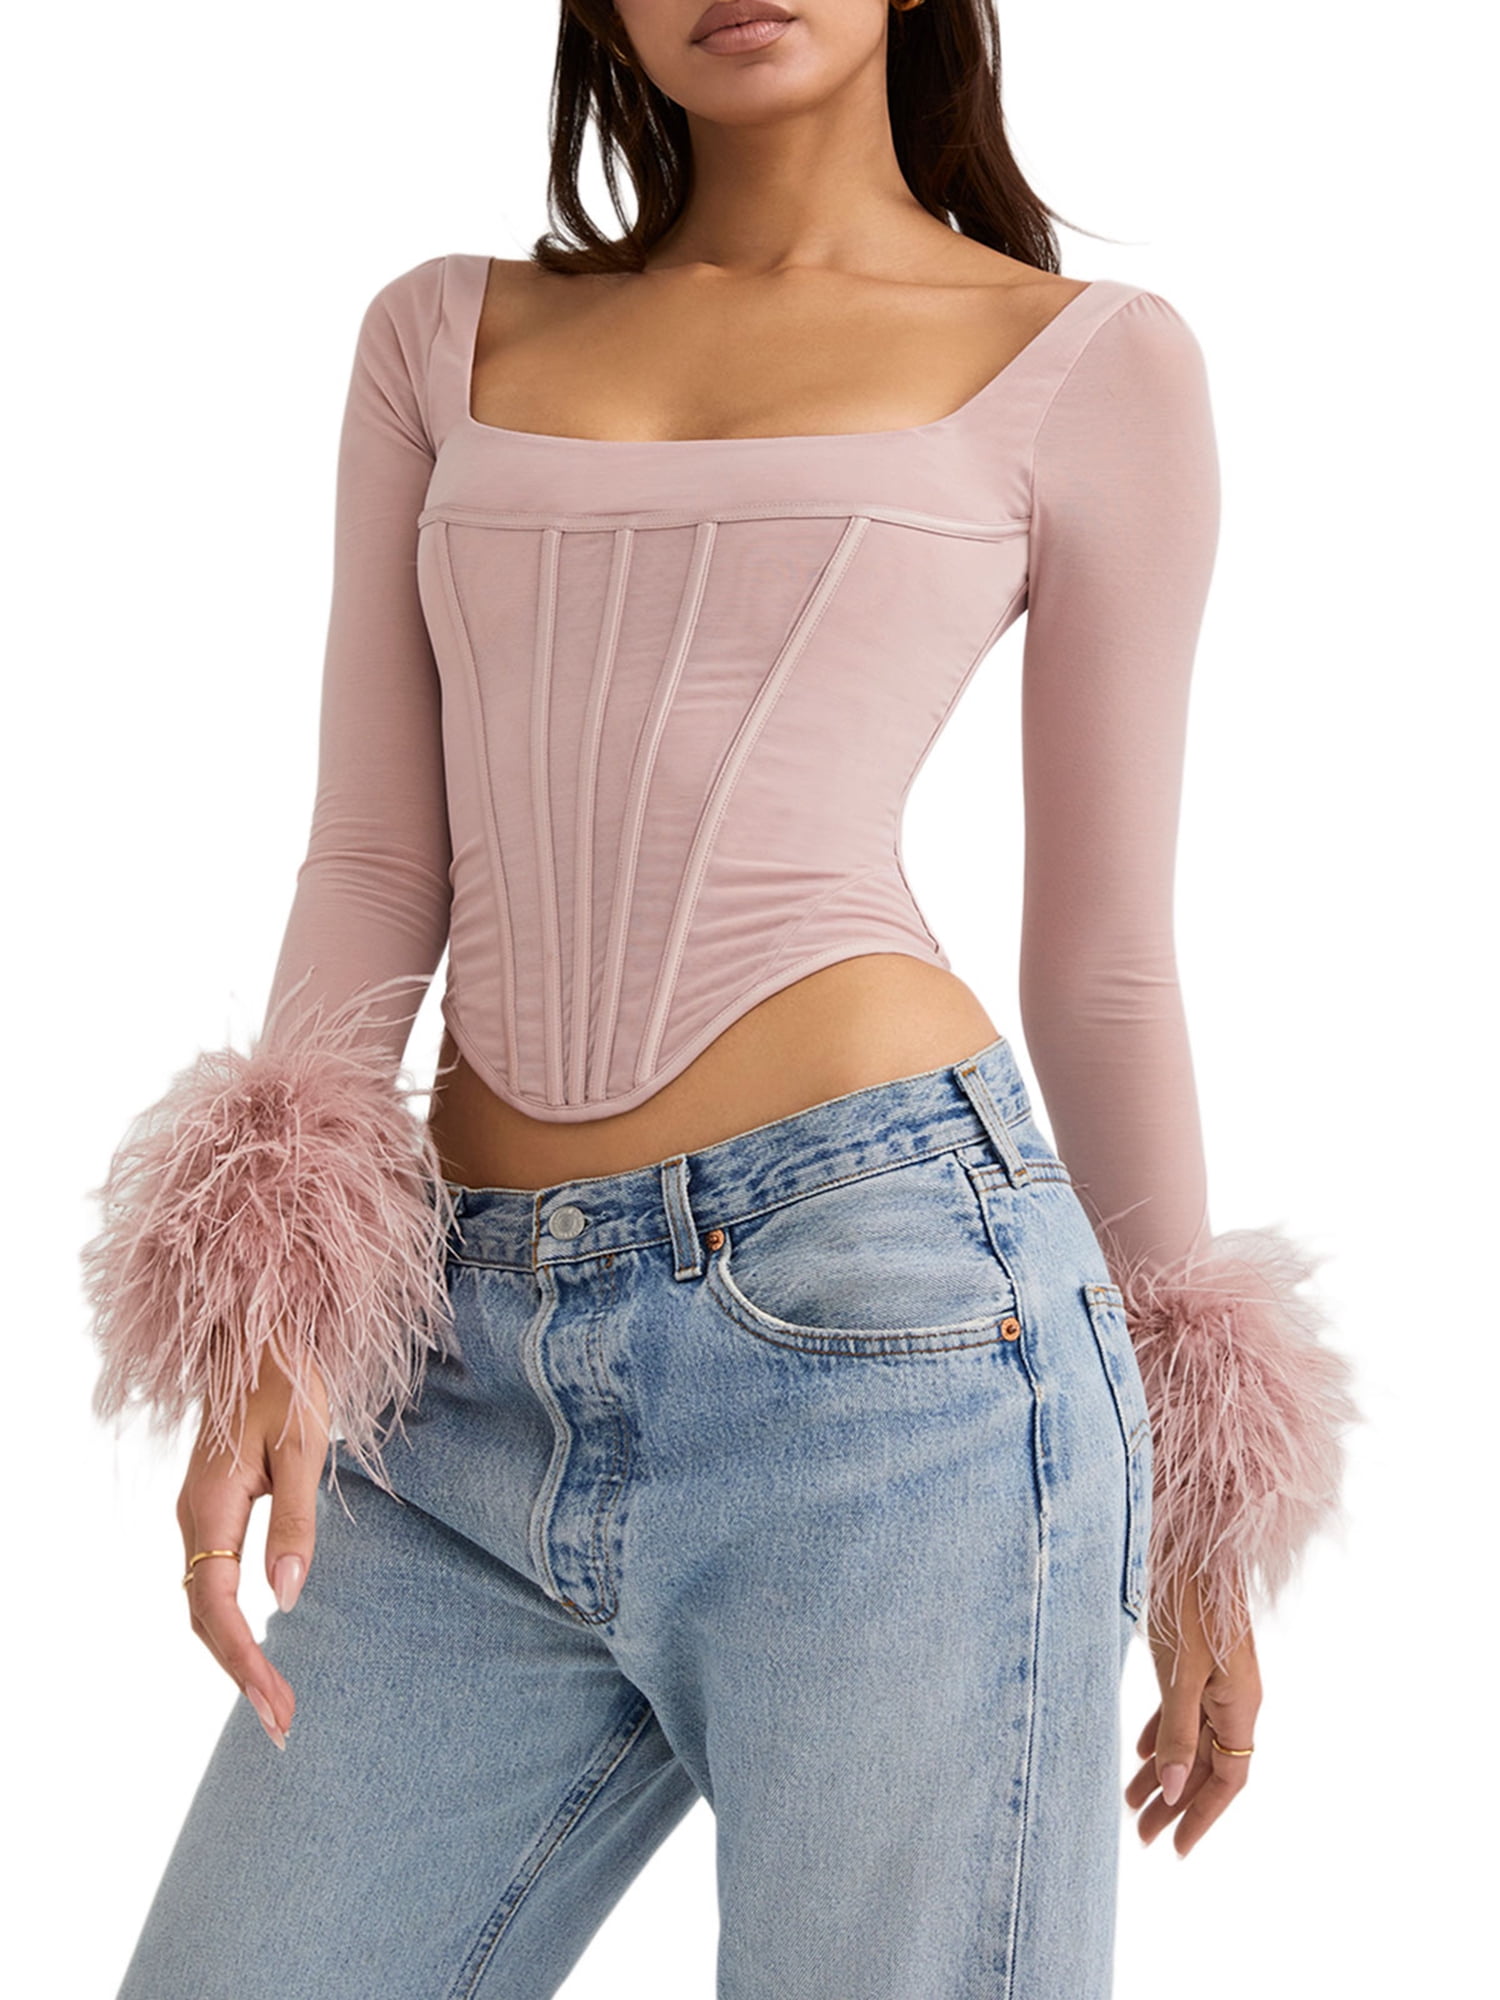 wybzd Women Feather Trim Long Sleeve Top Mesh Sleeve Bustier Corset Top  Tight Shirt Faux Fur Blouse Pink S 